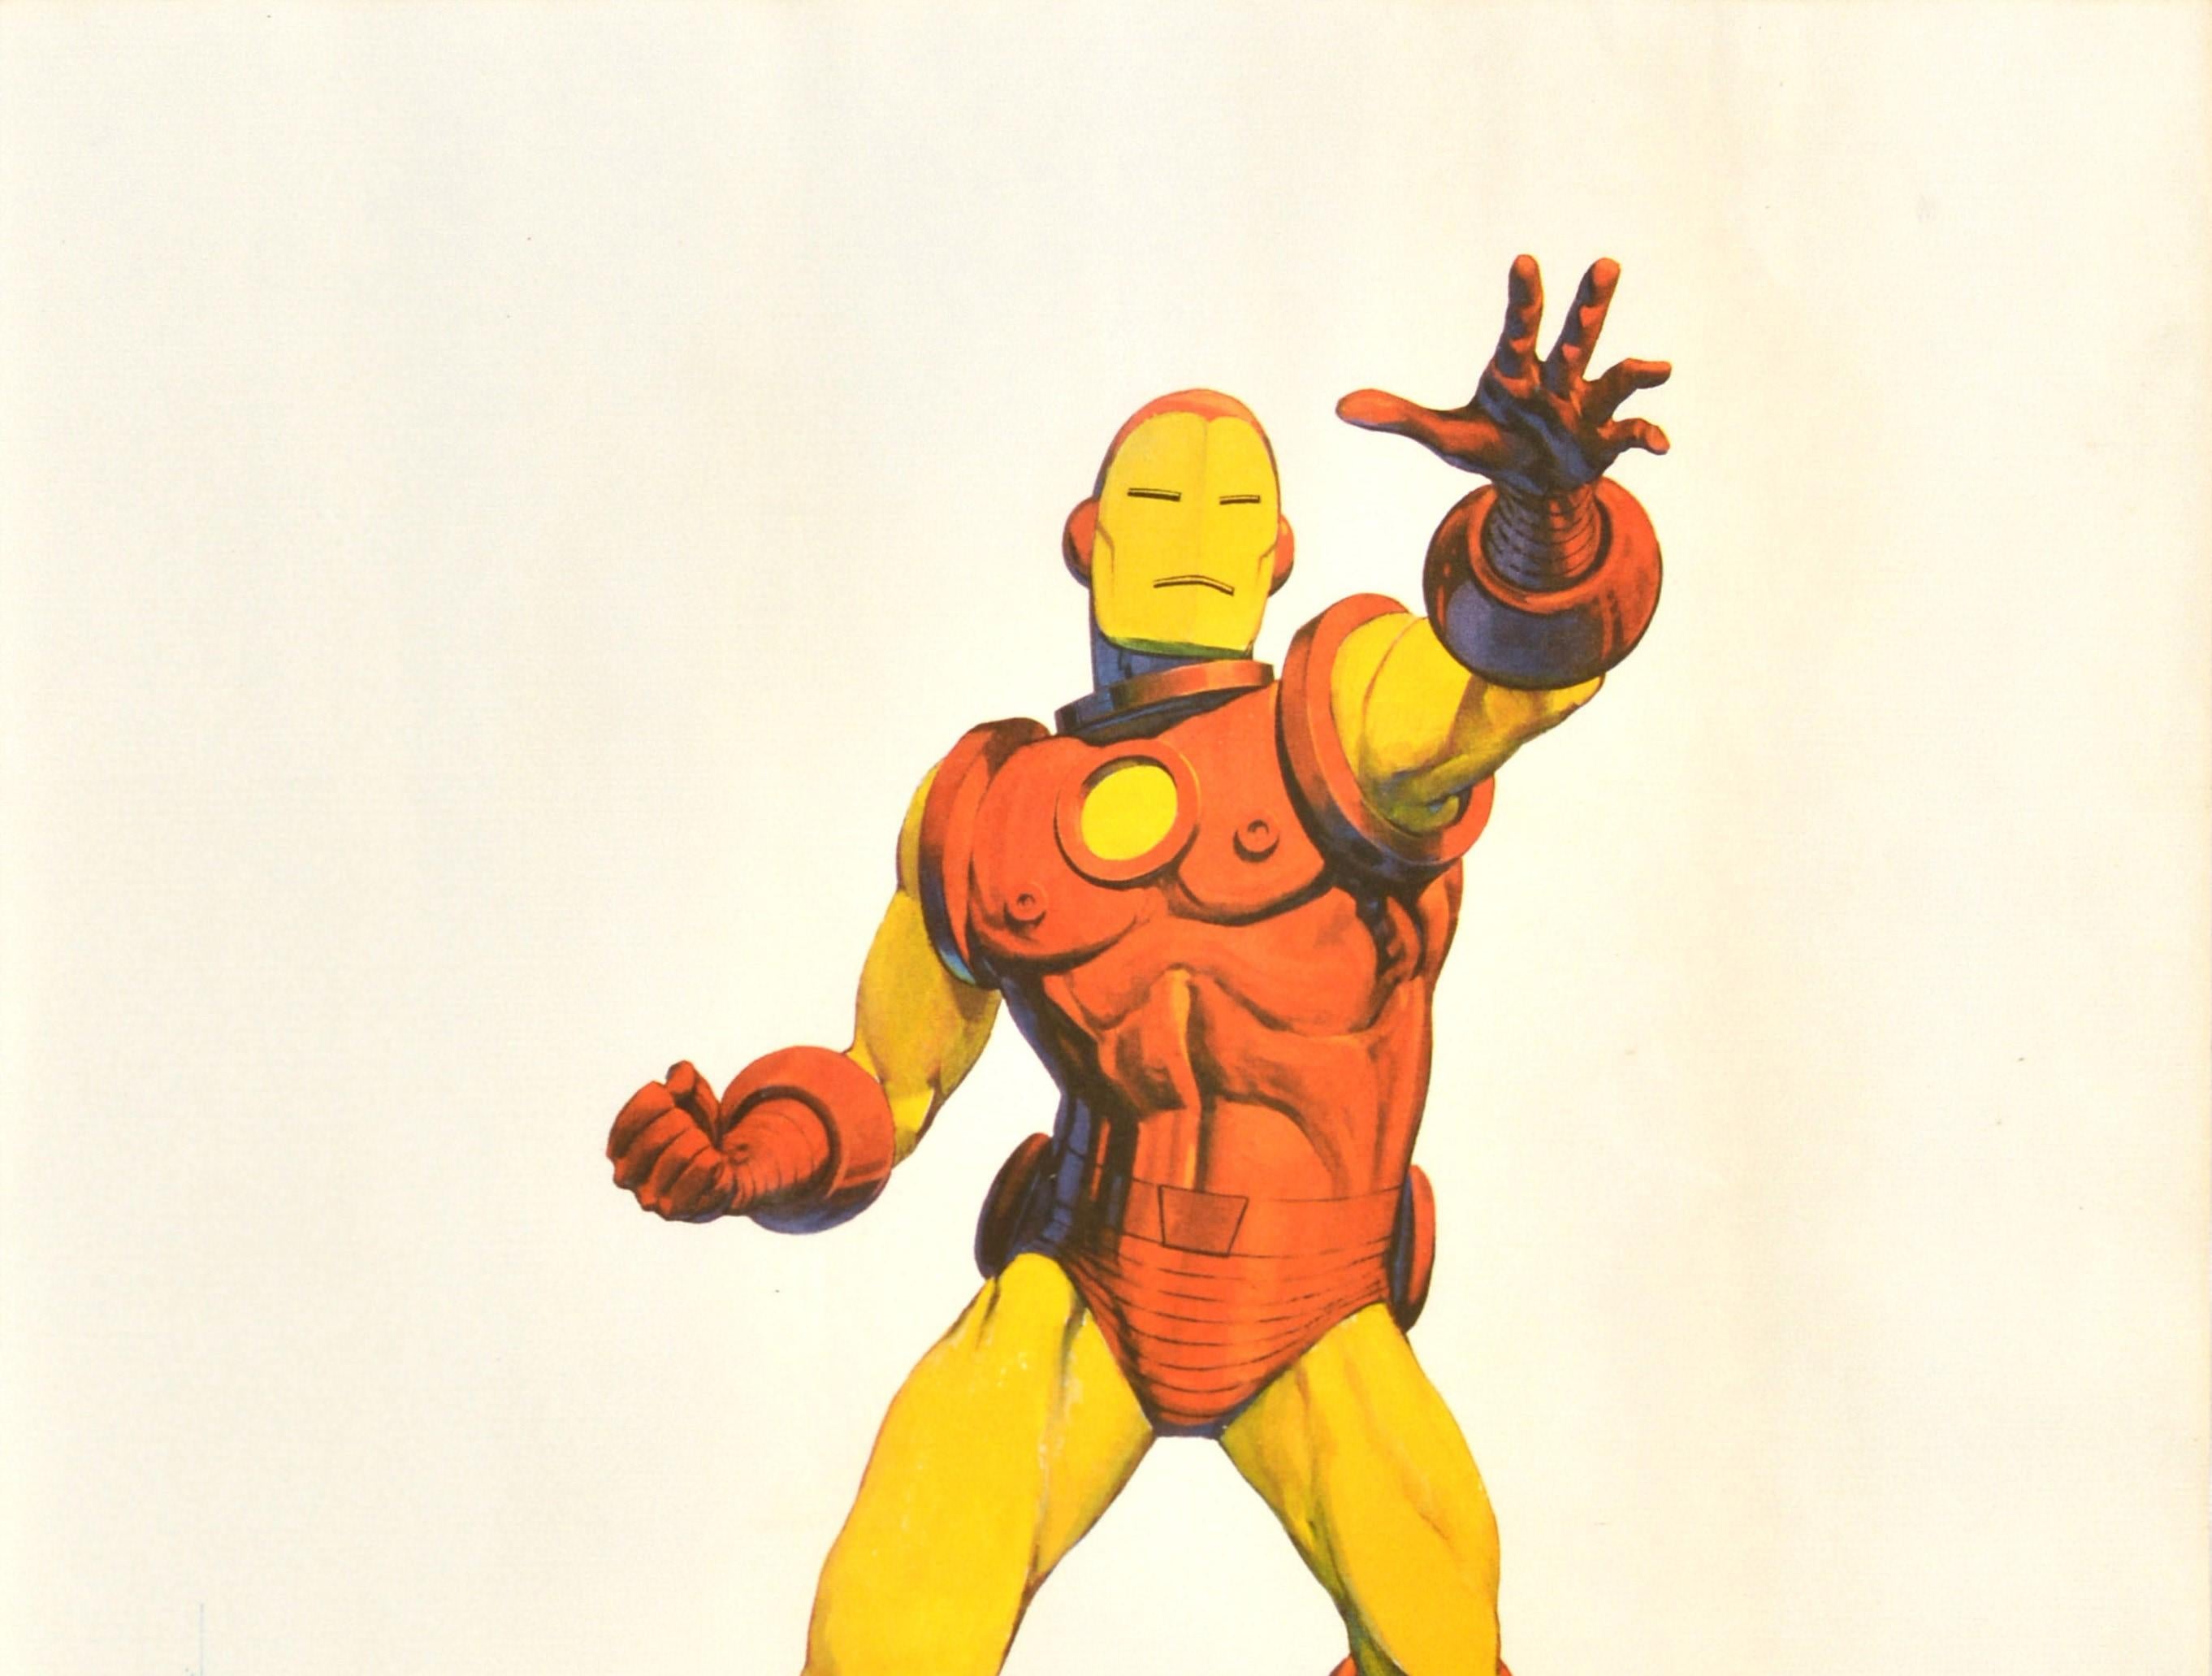 Original Vintage Marvel Film Poster Iron Man Stark Animated Superhero Movie Art - Print by Lopez Espi